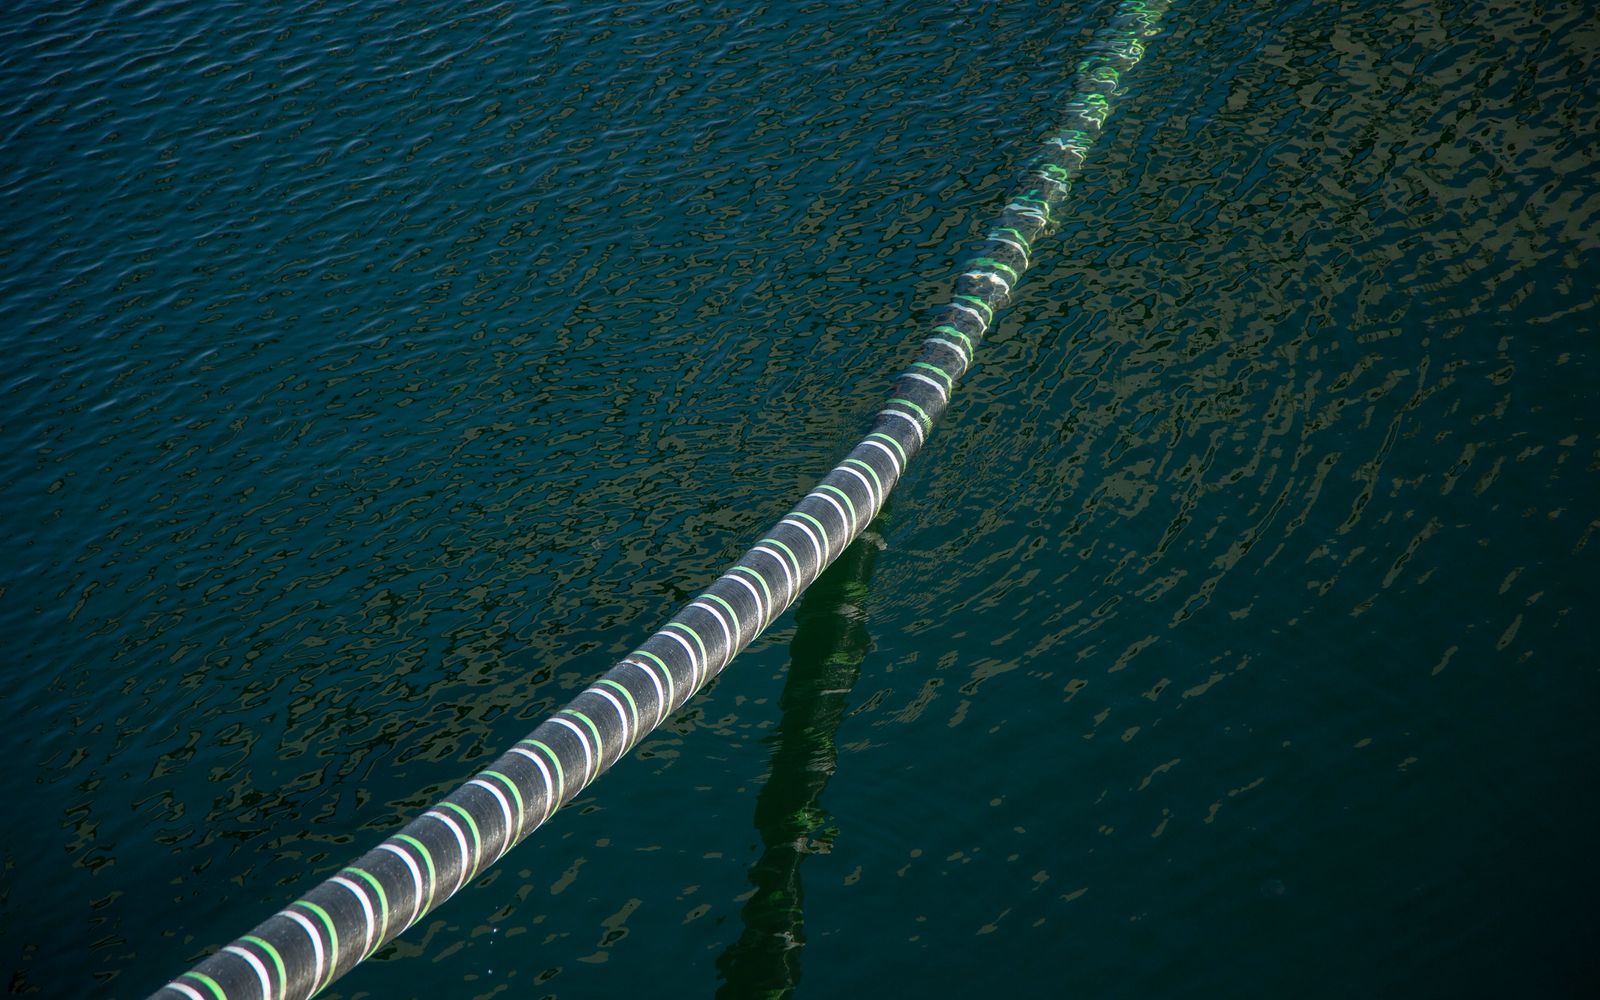 Offshore cable in ocean water